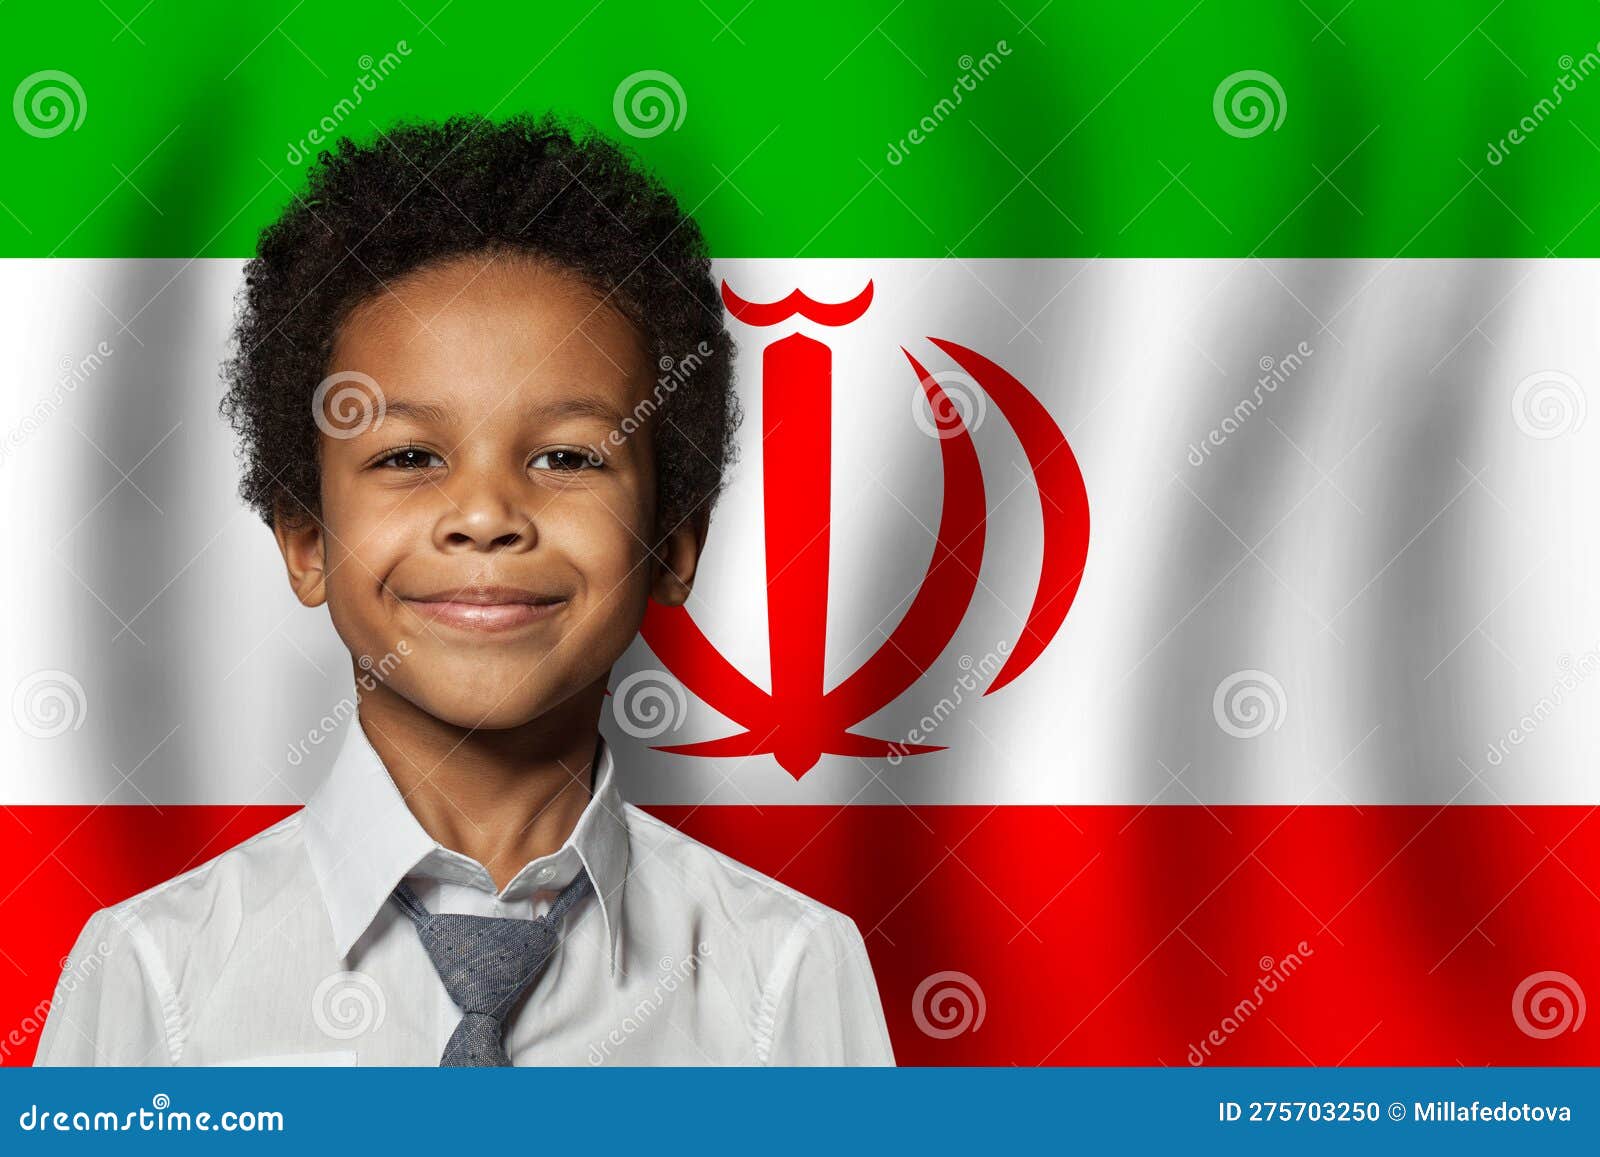 irani kid boy on flag of iran background. education and childhood concept